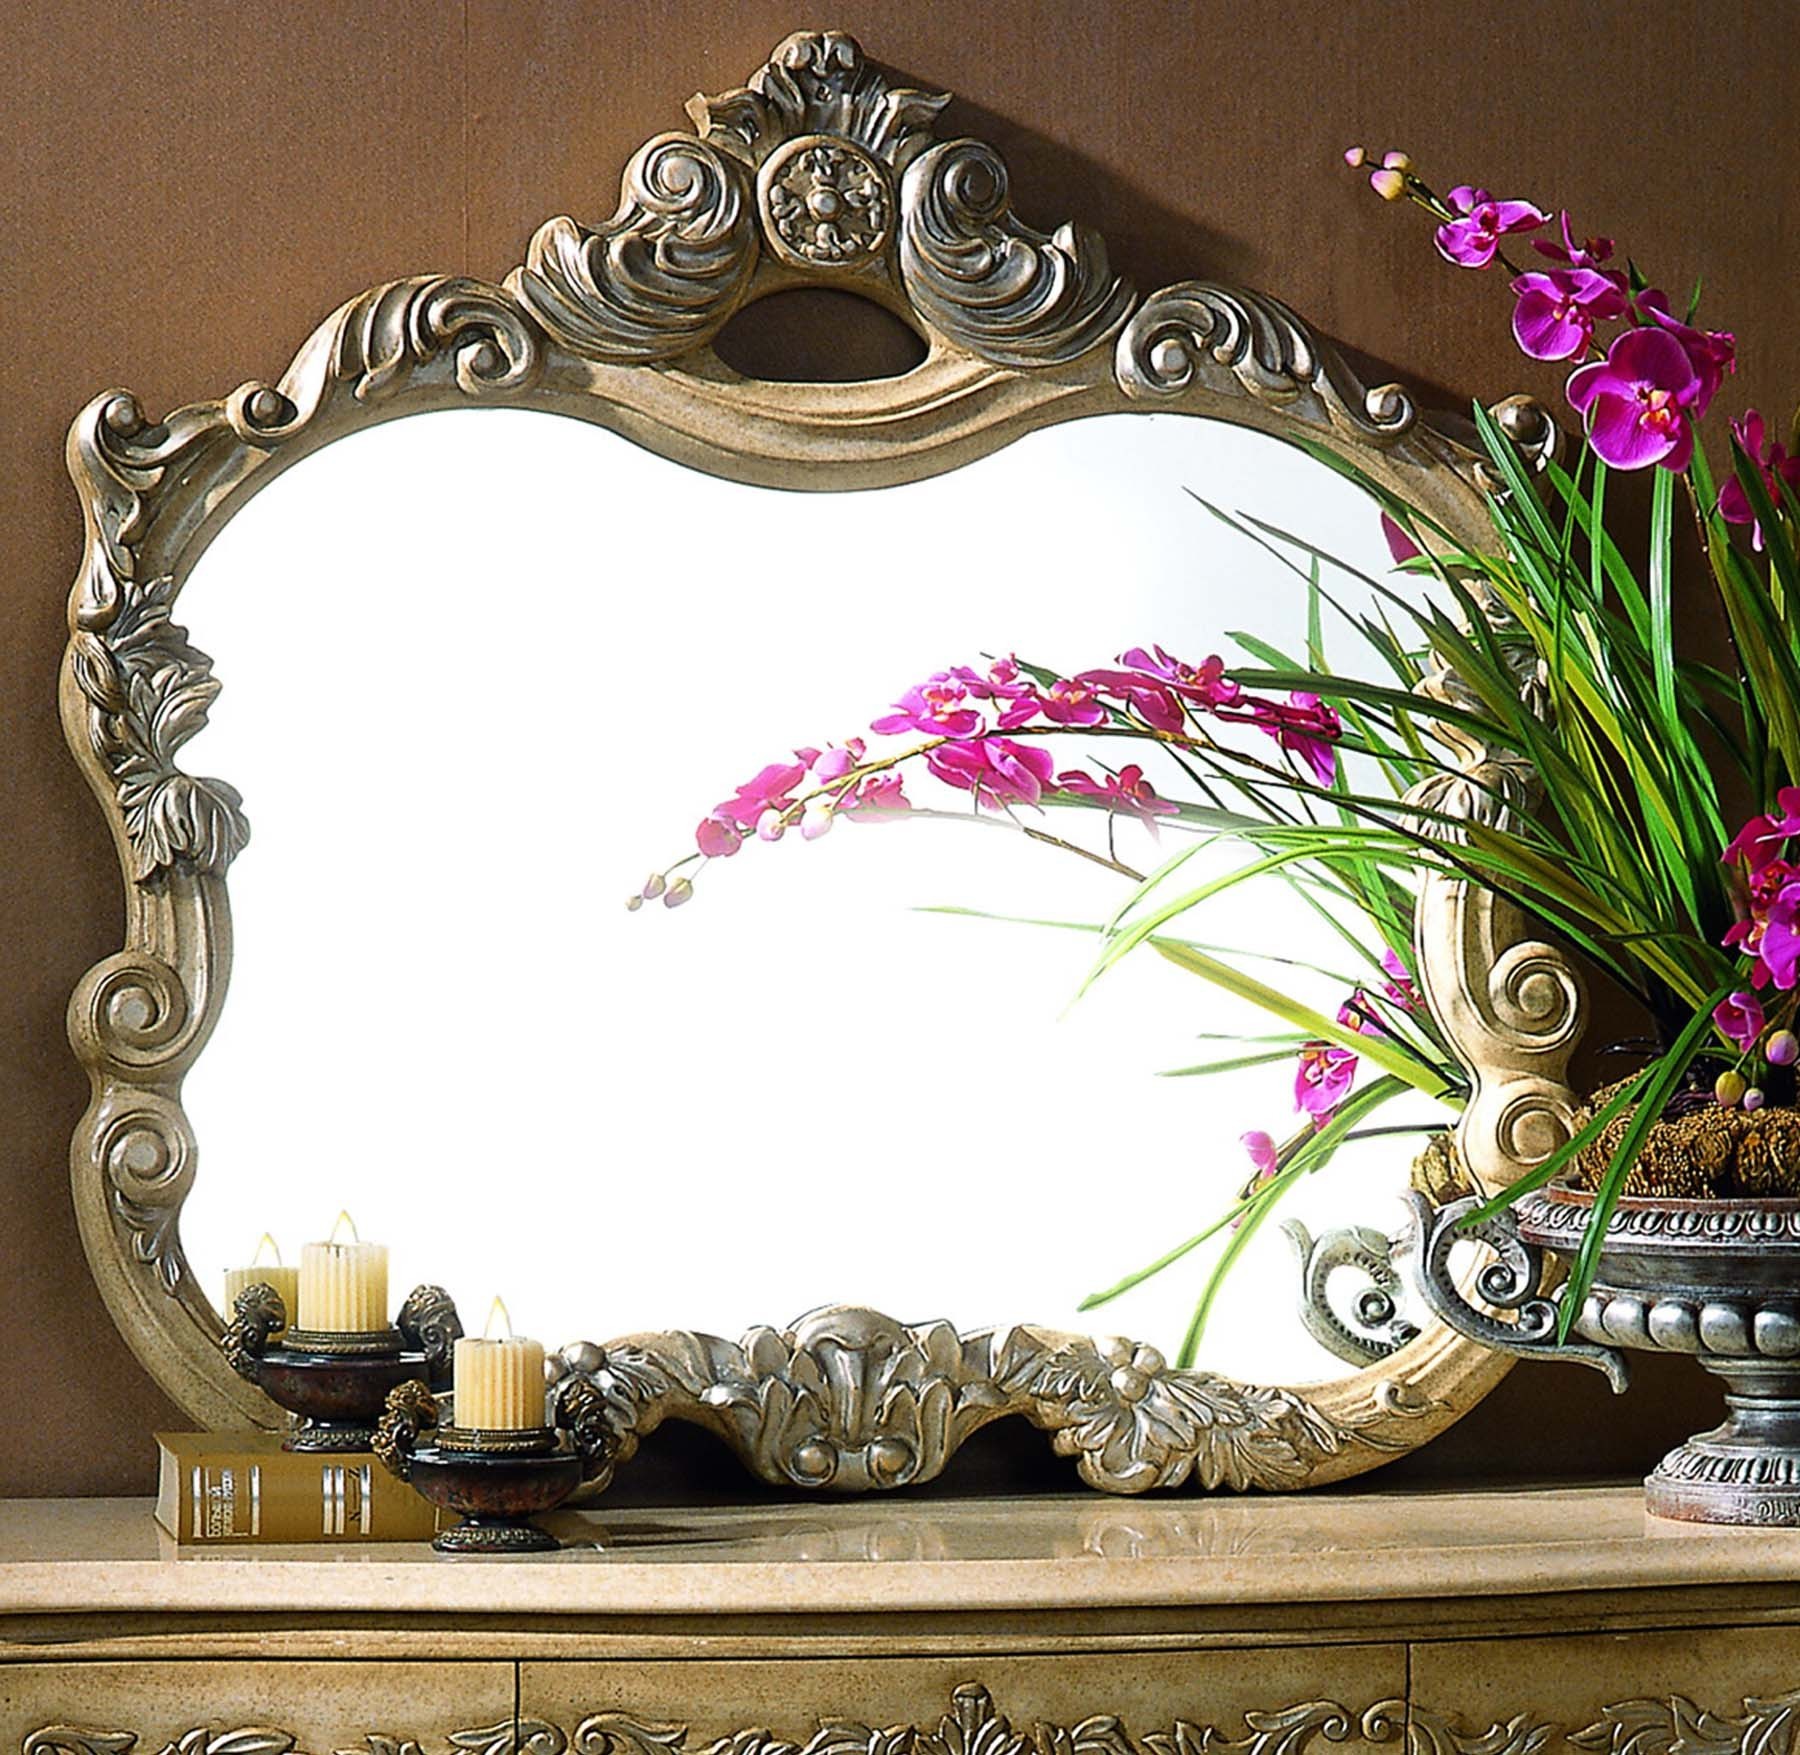 Sonoma Accent Mirror shown in Antique Bisque finish